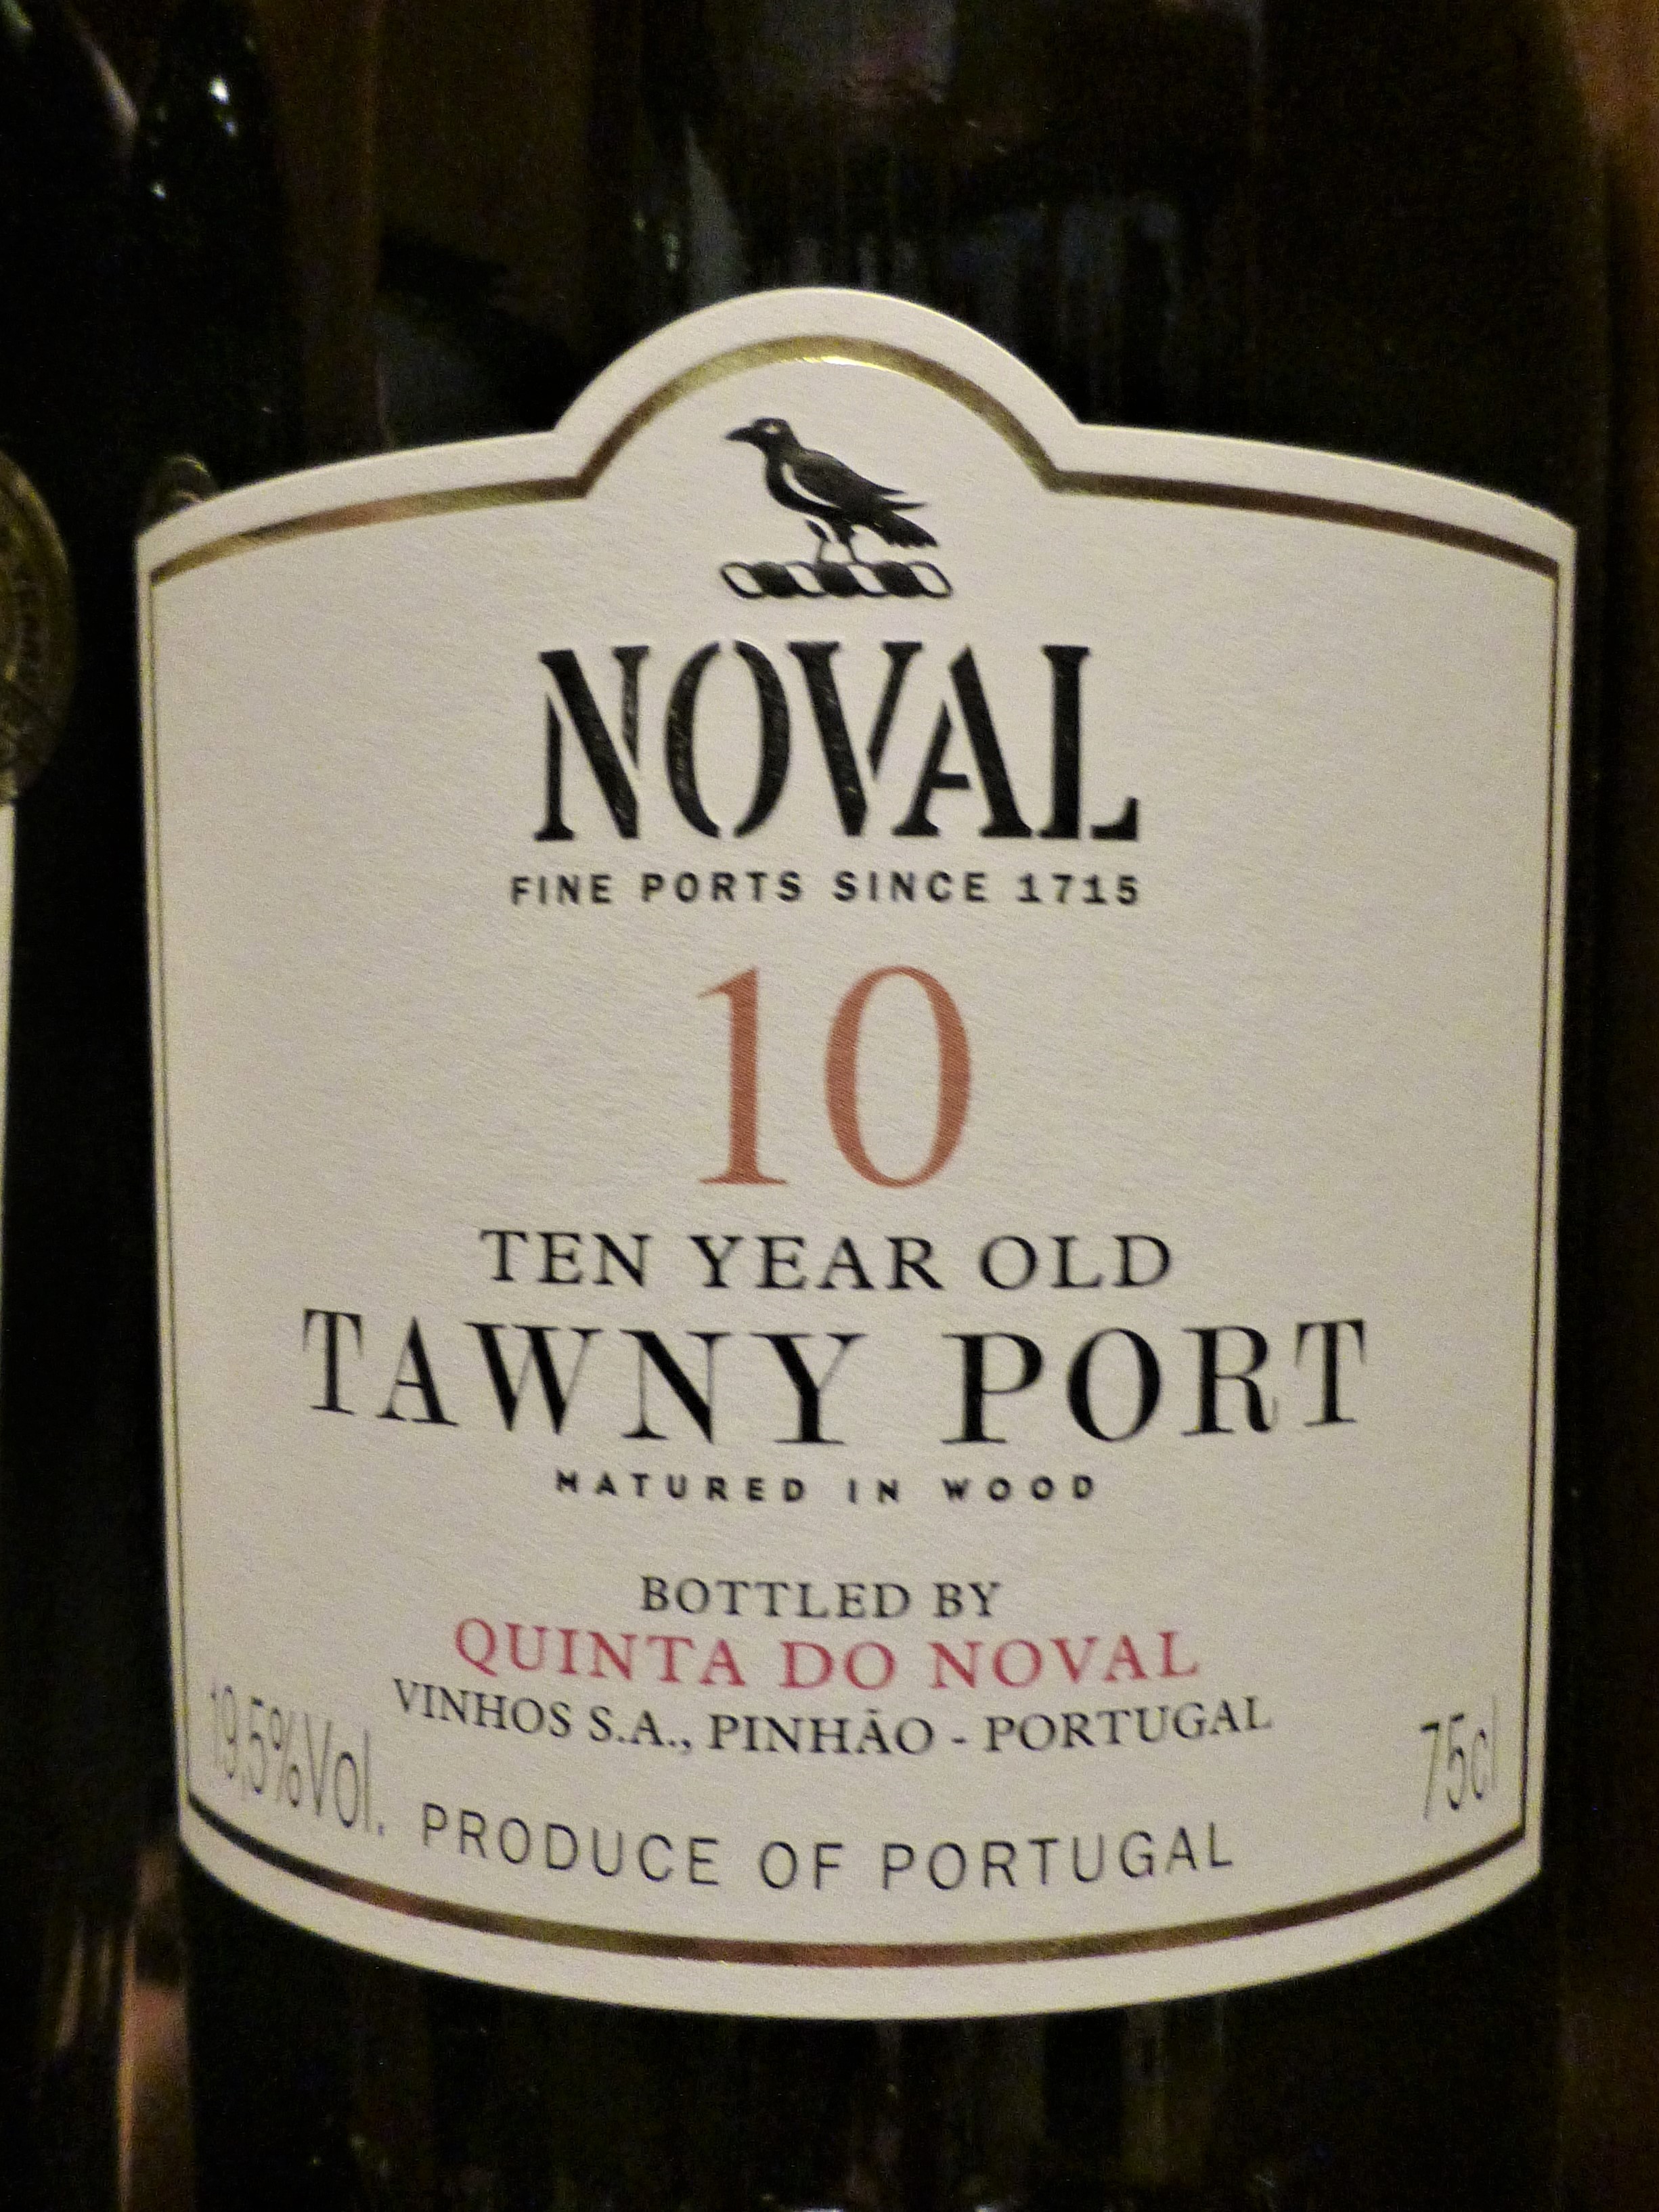 10 Year Old Tawny Port, Quinta do Noval